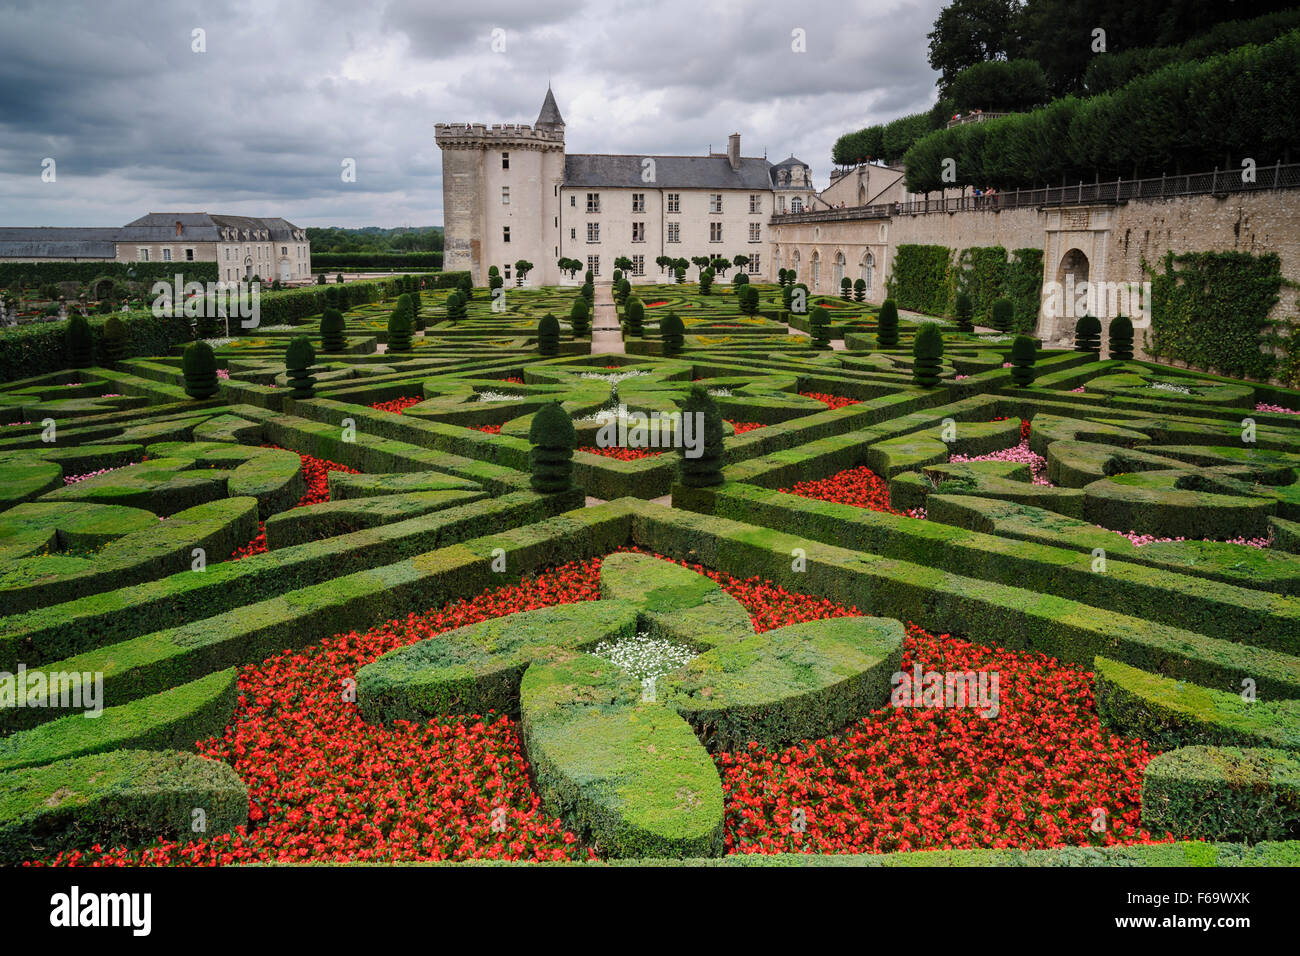 The Chateau de Villandry and its gardens, UNESCO World Heritage Site, Indre-et-Loire, Loire Valley, France, Europe Stock Photo